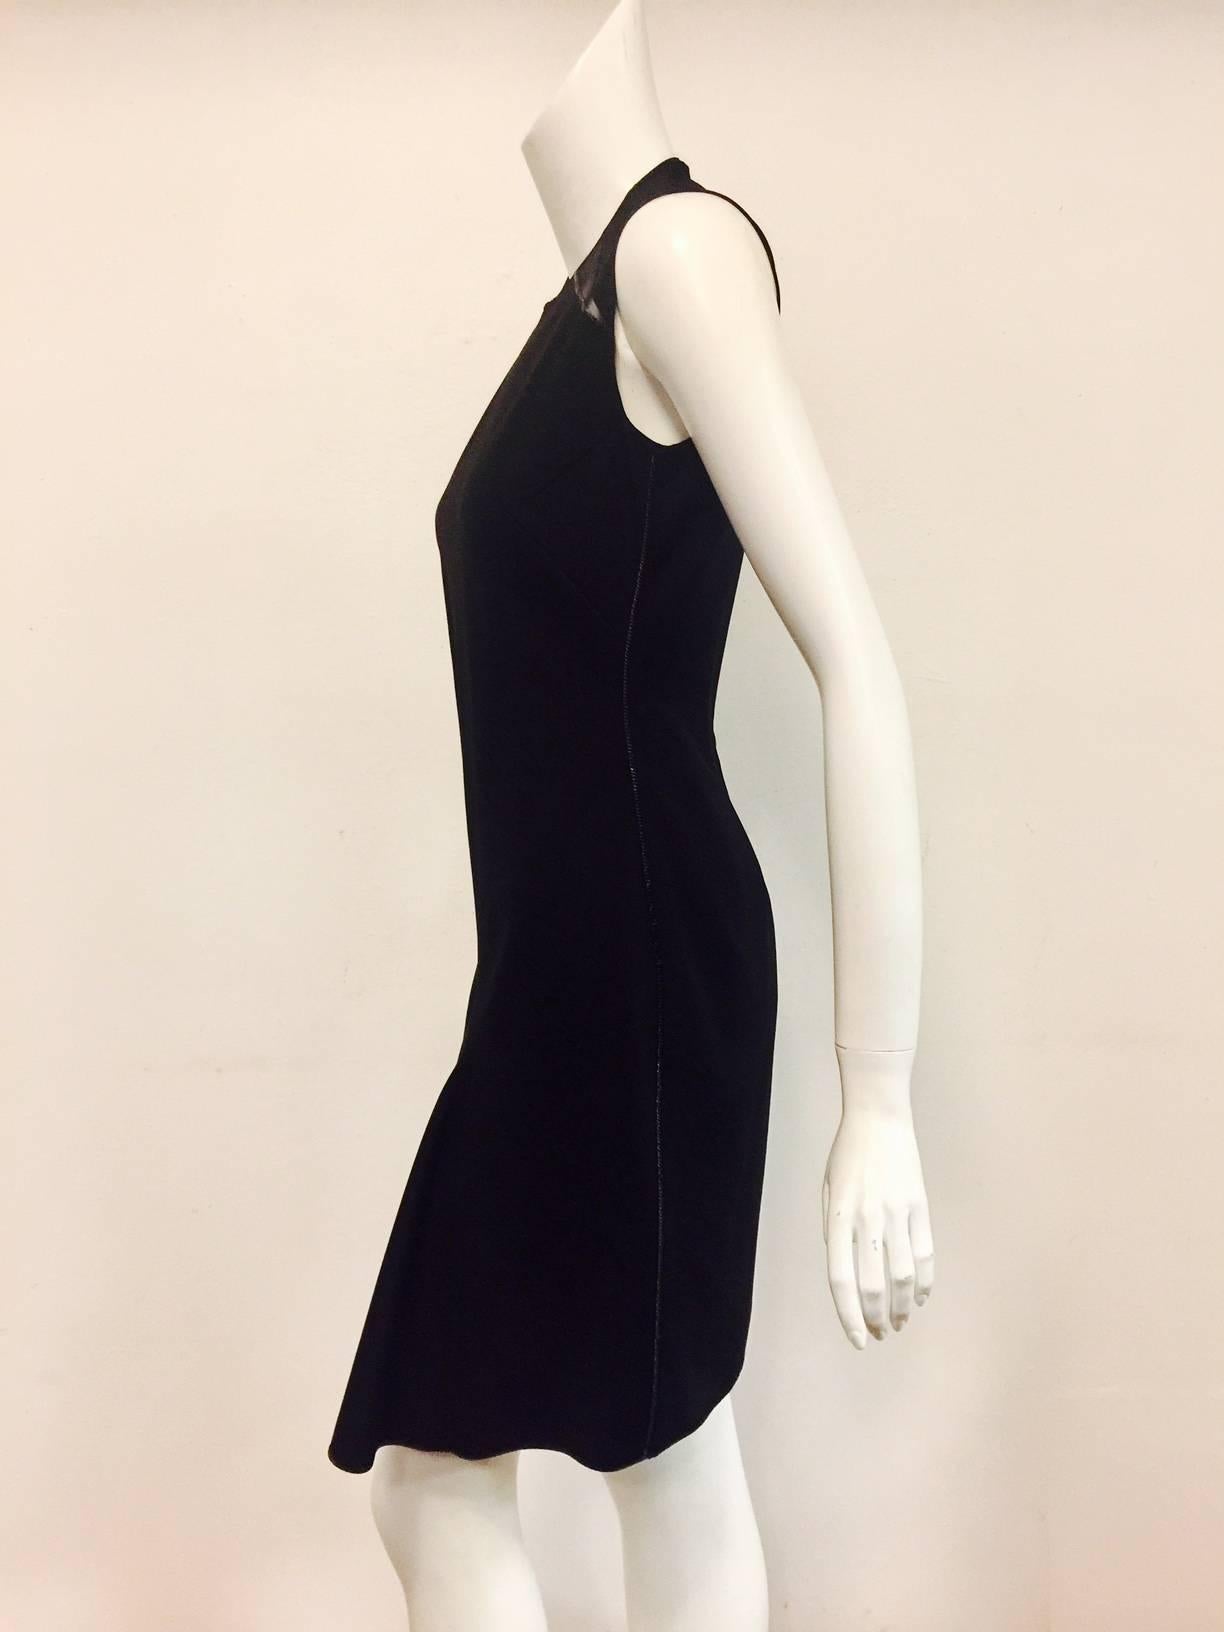 Sensational Stella Mc Cartney Little Black Dress With Decorative Chains at Sides 1